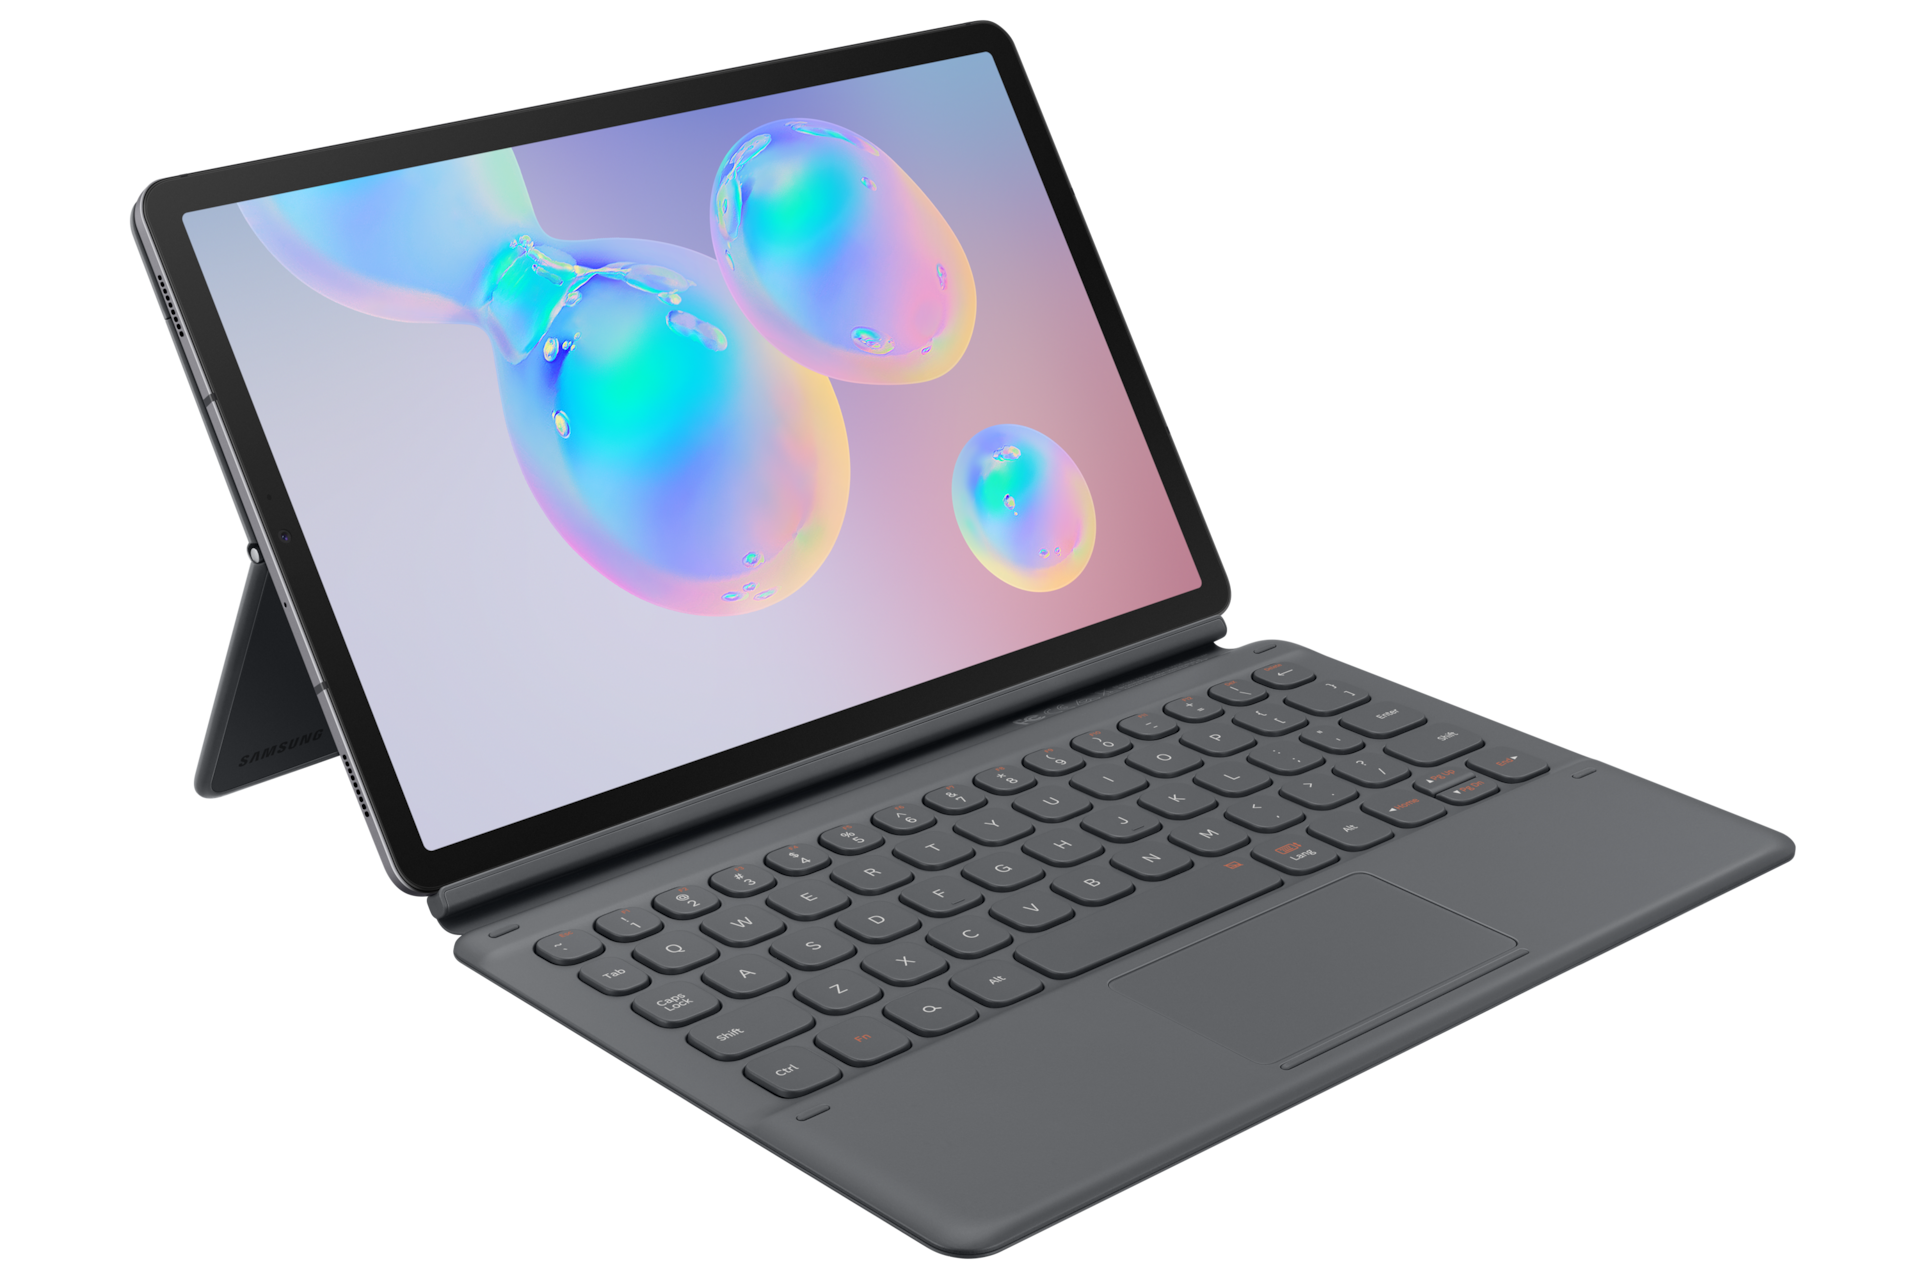 custodia tablet 10.1 samsung con tastiera